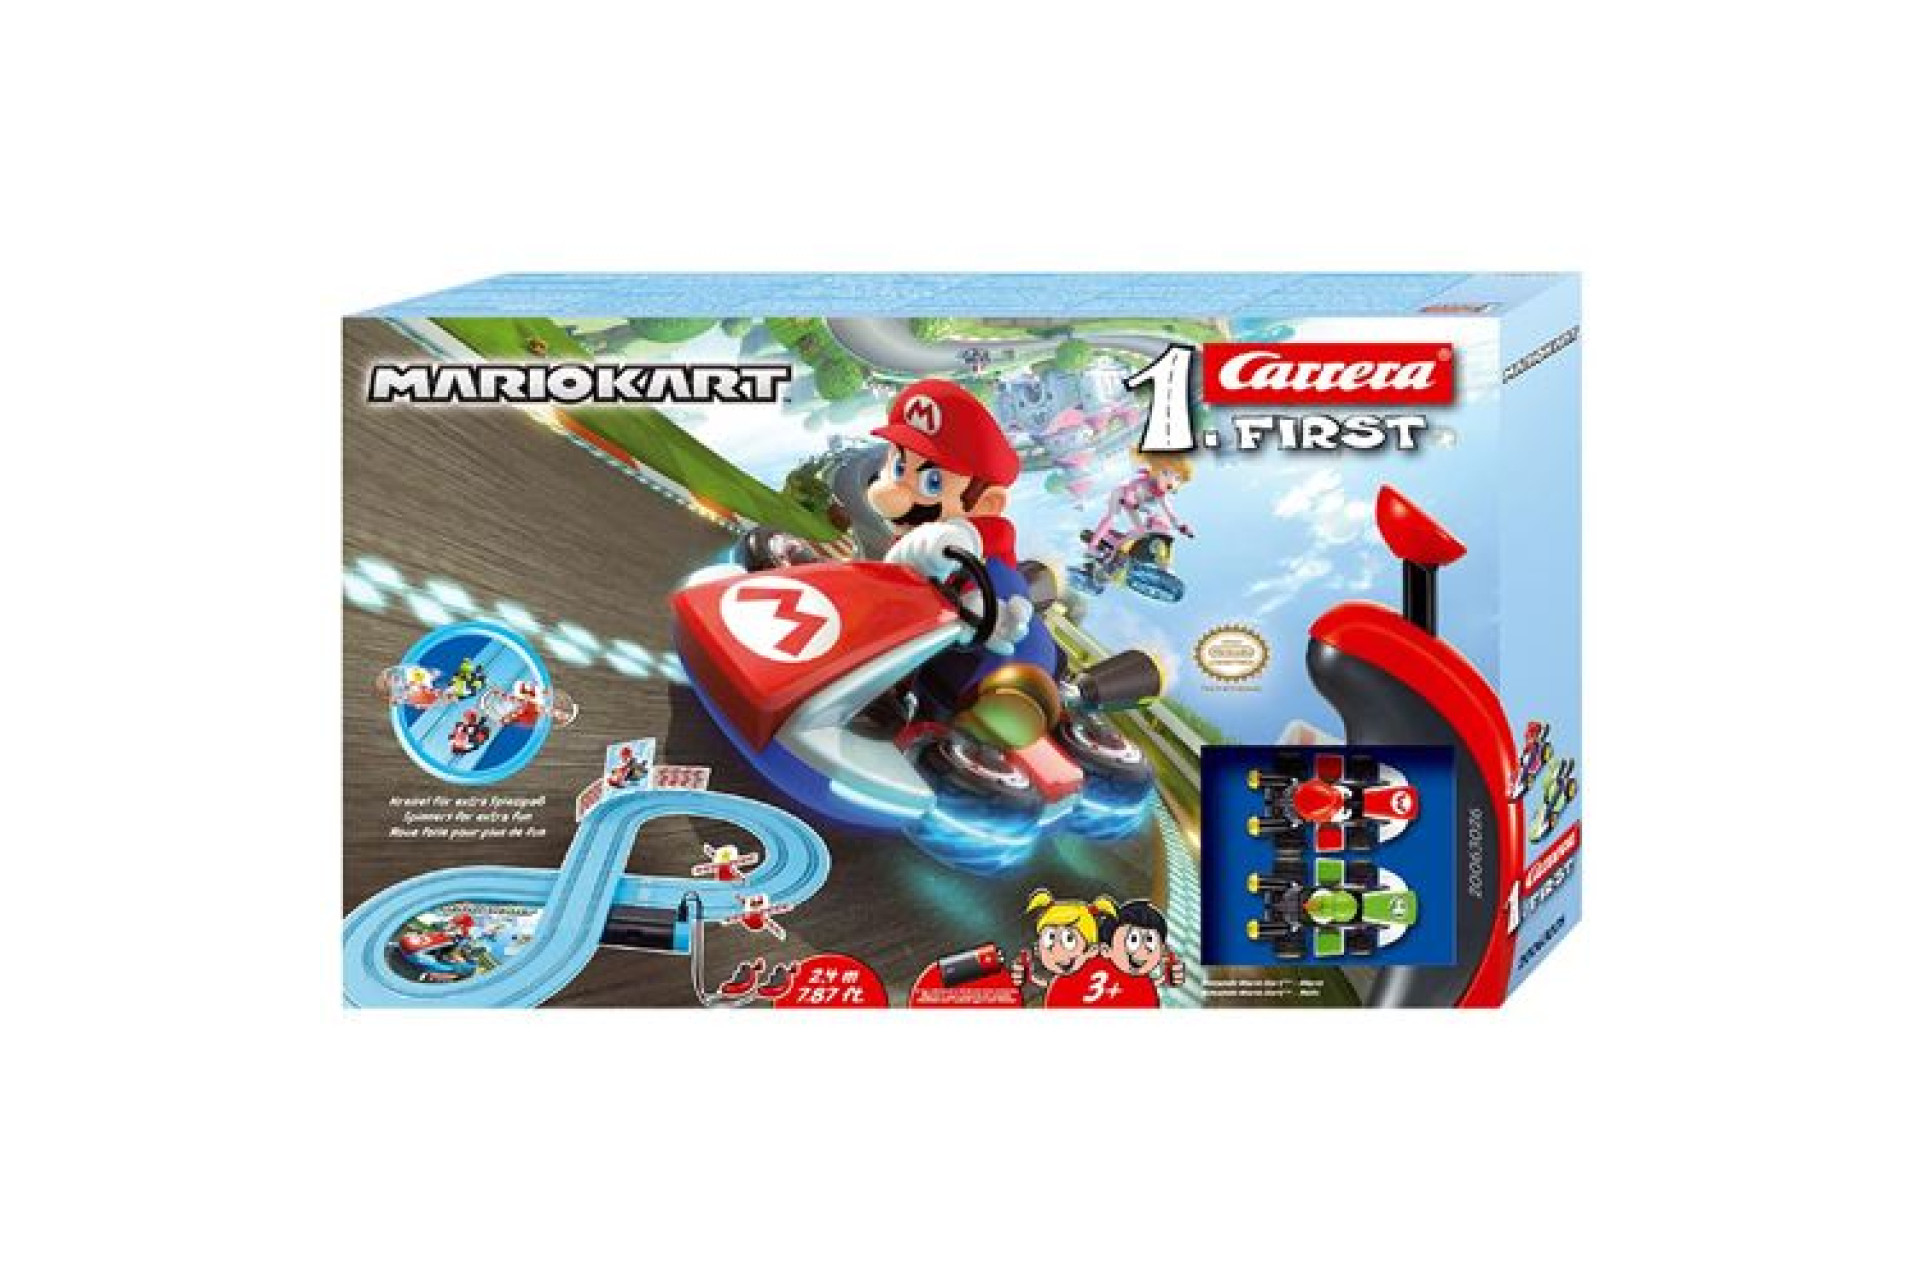 Acheter Circuit Carrera First Nintendo Mario Kart avec piste et voitures